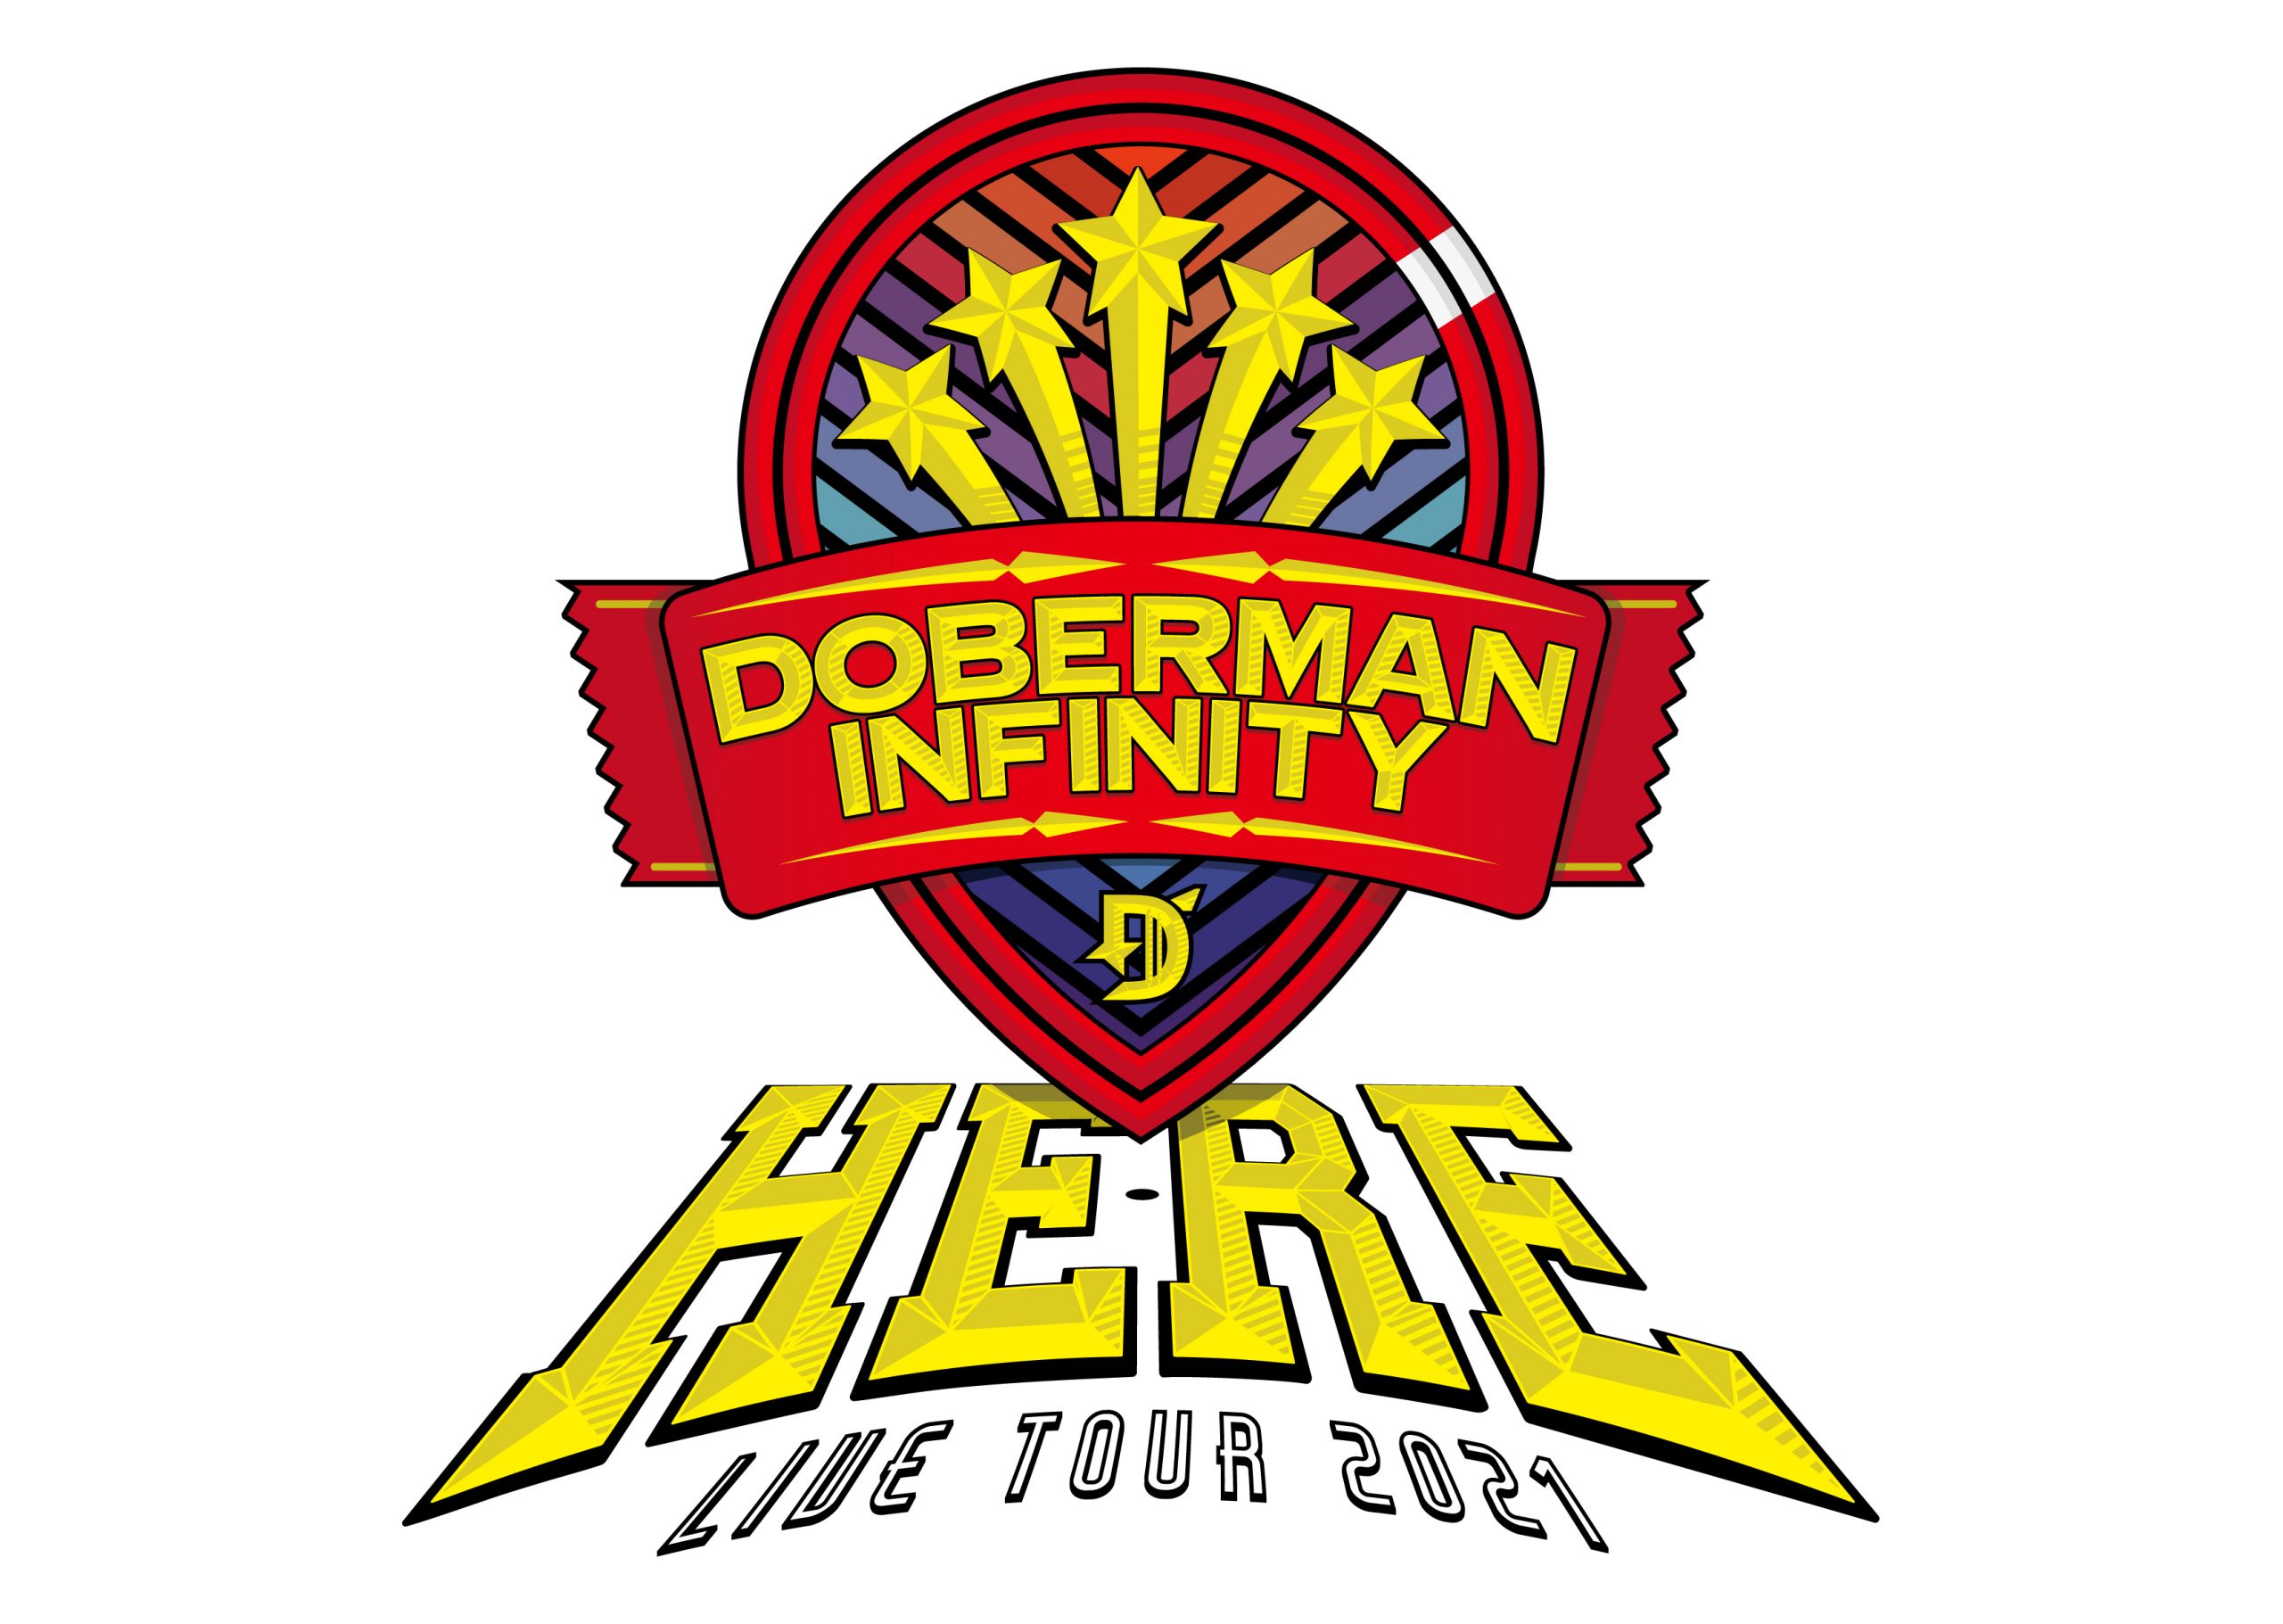 DOBERMAN INFINITY LIVE TOUR 2021 “HERE” | ロームシアター京都